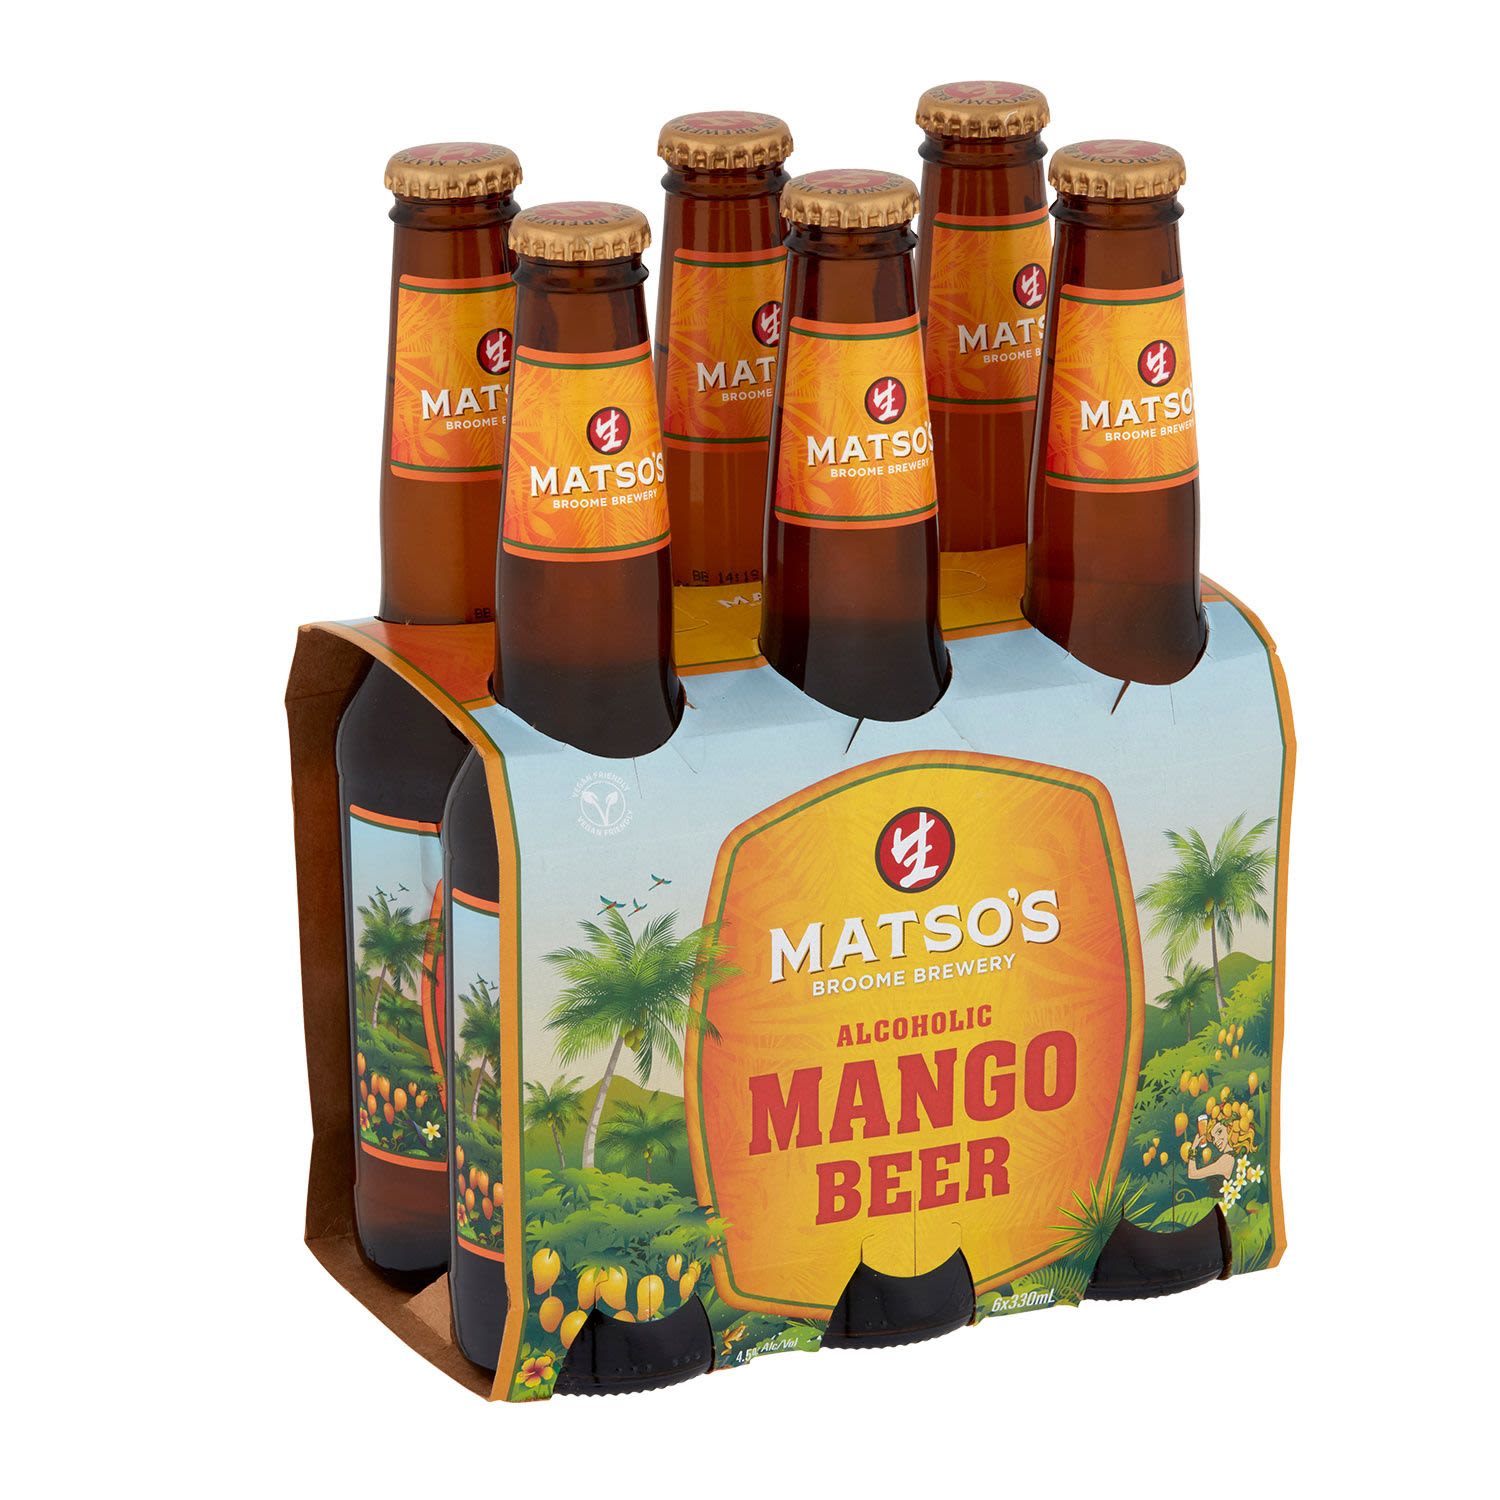 Matso's Mango Beer 330mL 6 Pack